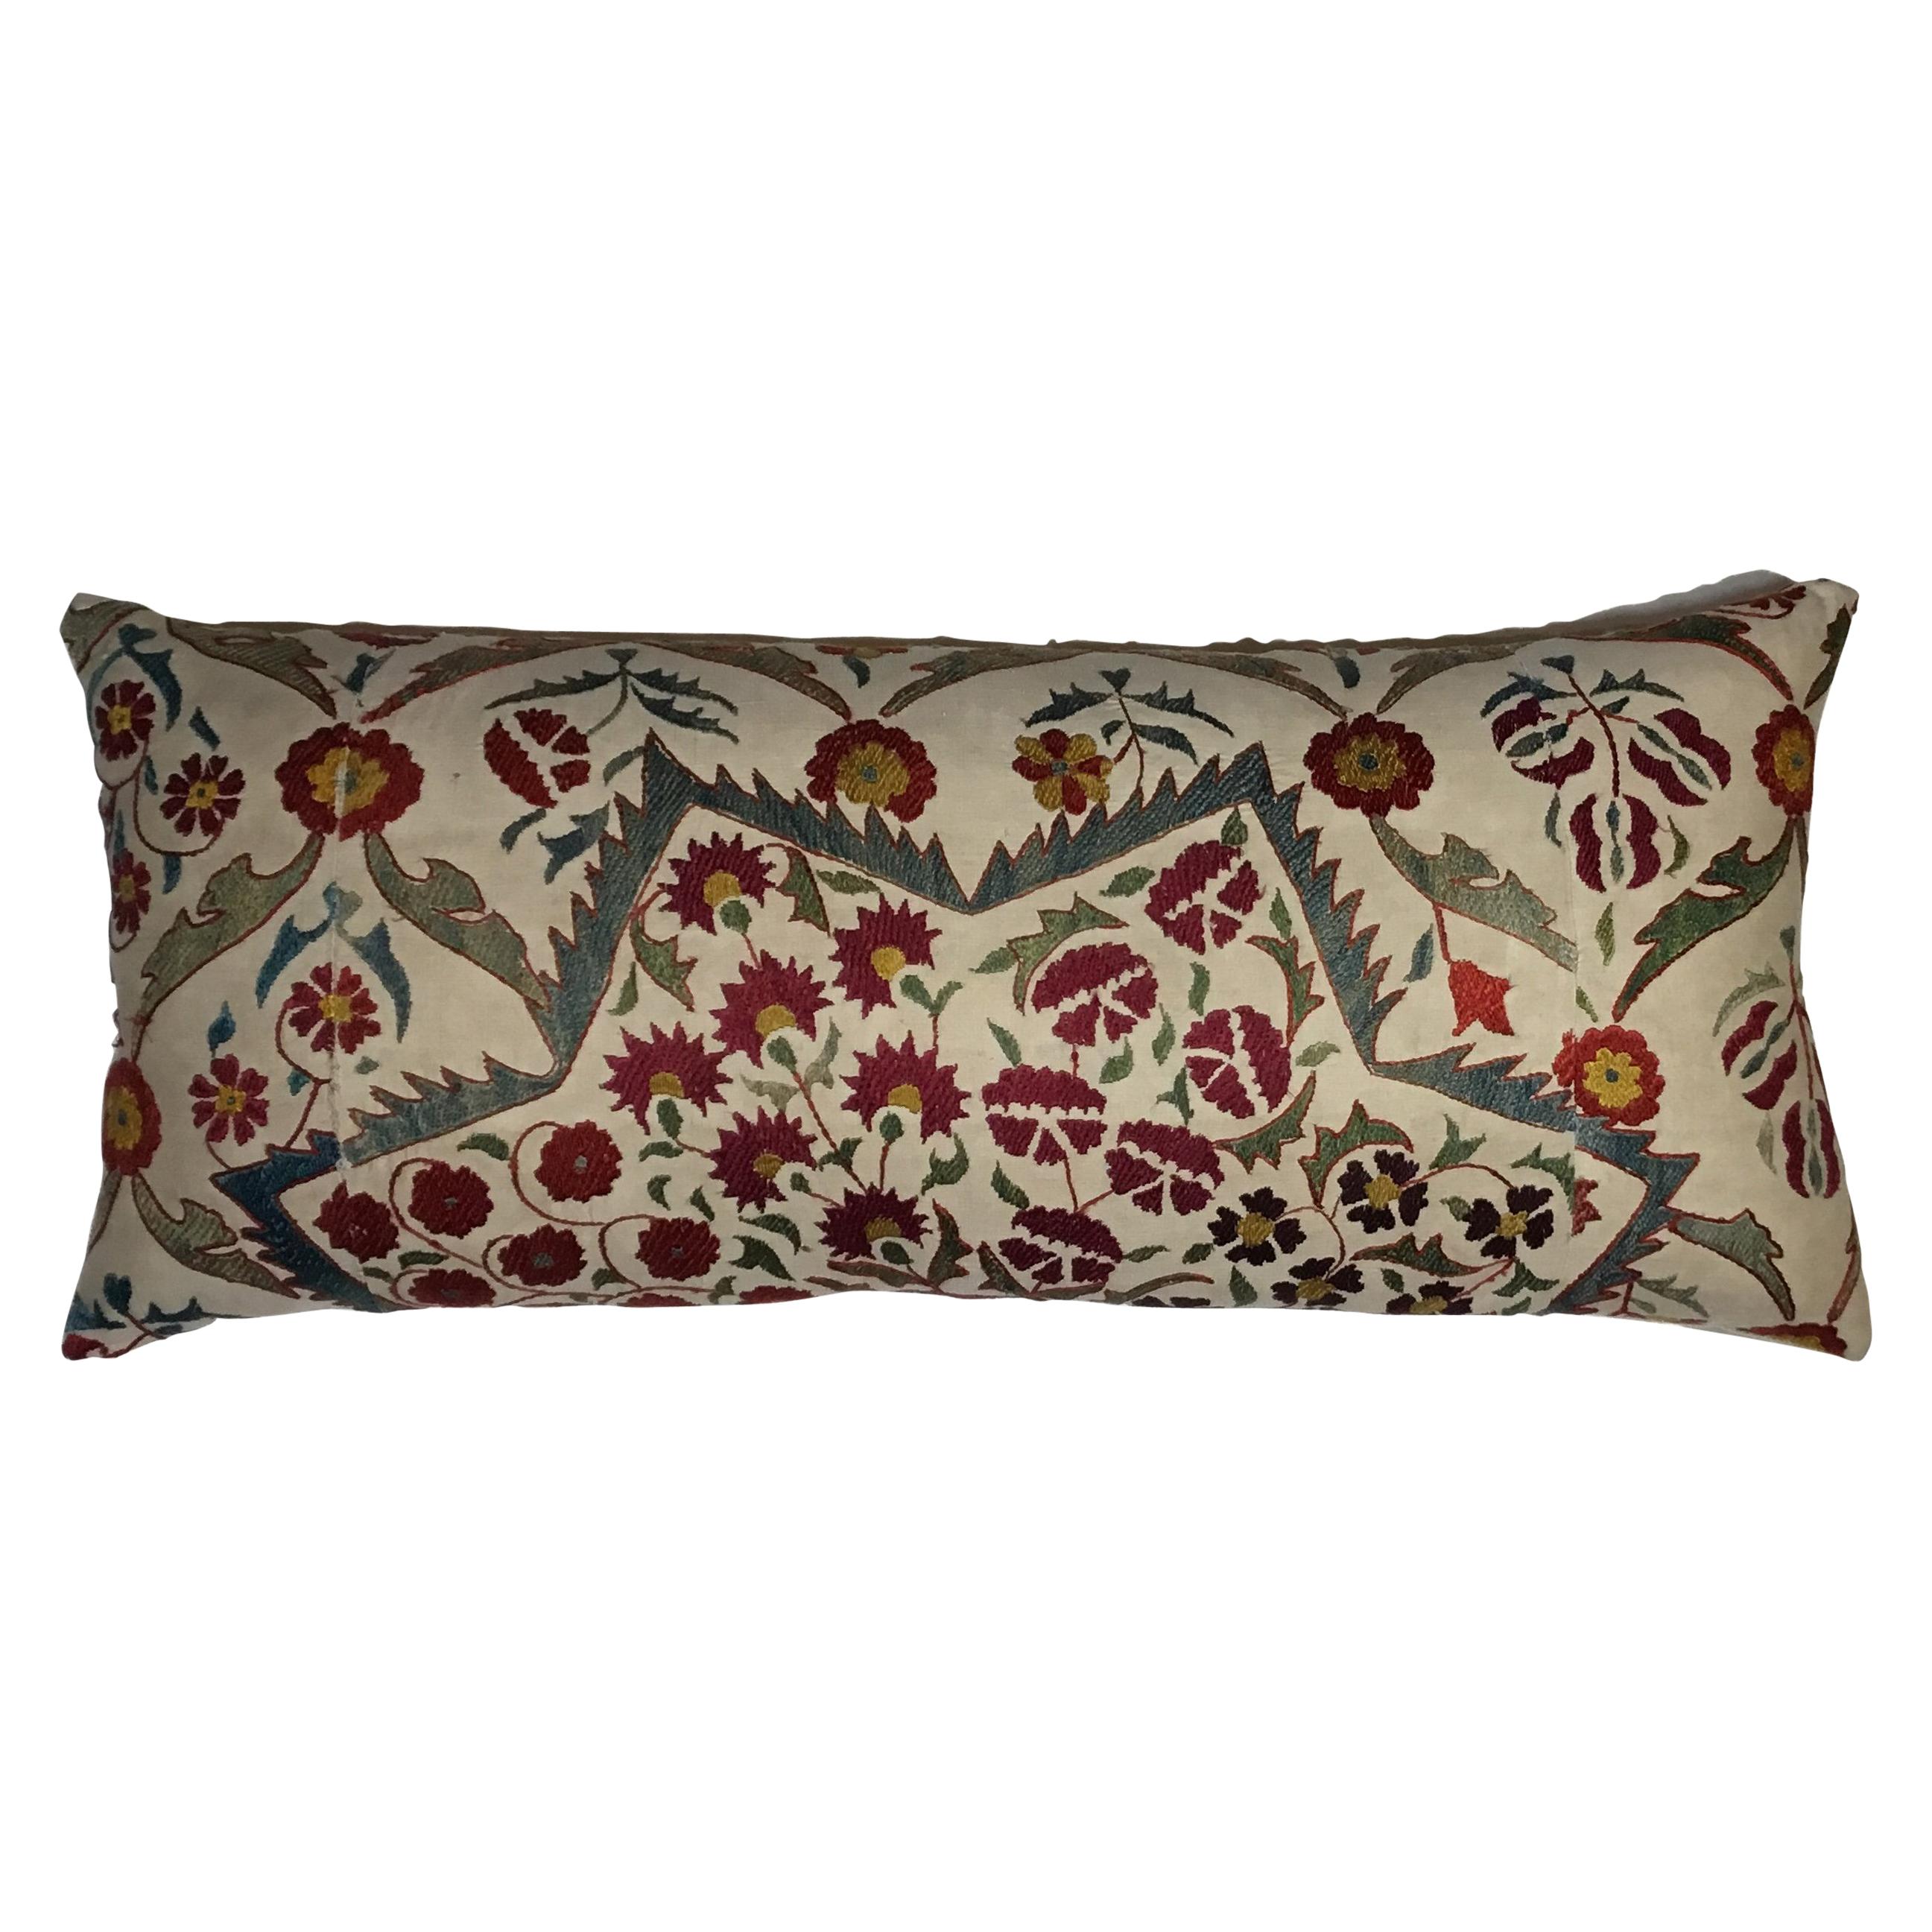 Large Embroidery Suzani Pillow